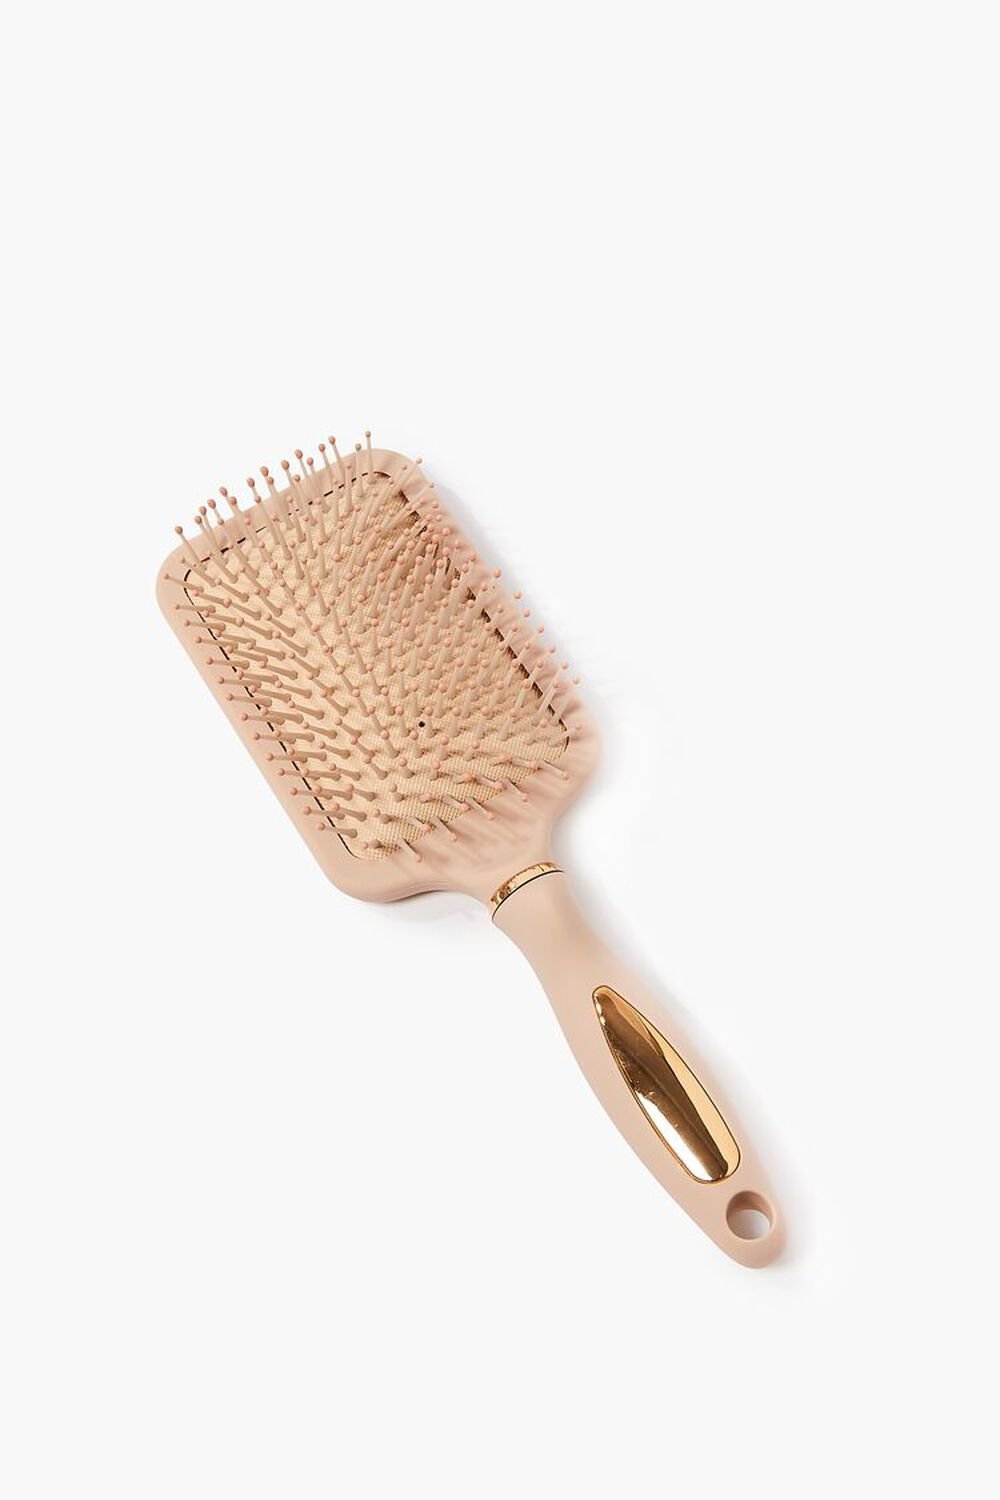 NUDE/GOLD Square Paddle Hair Brush, image 1